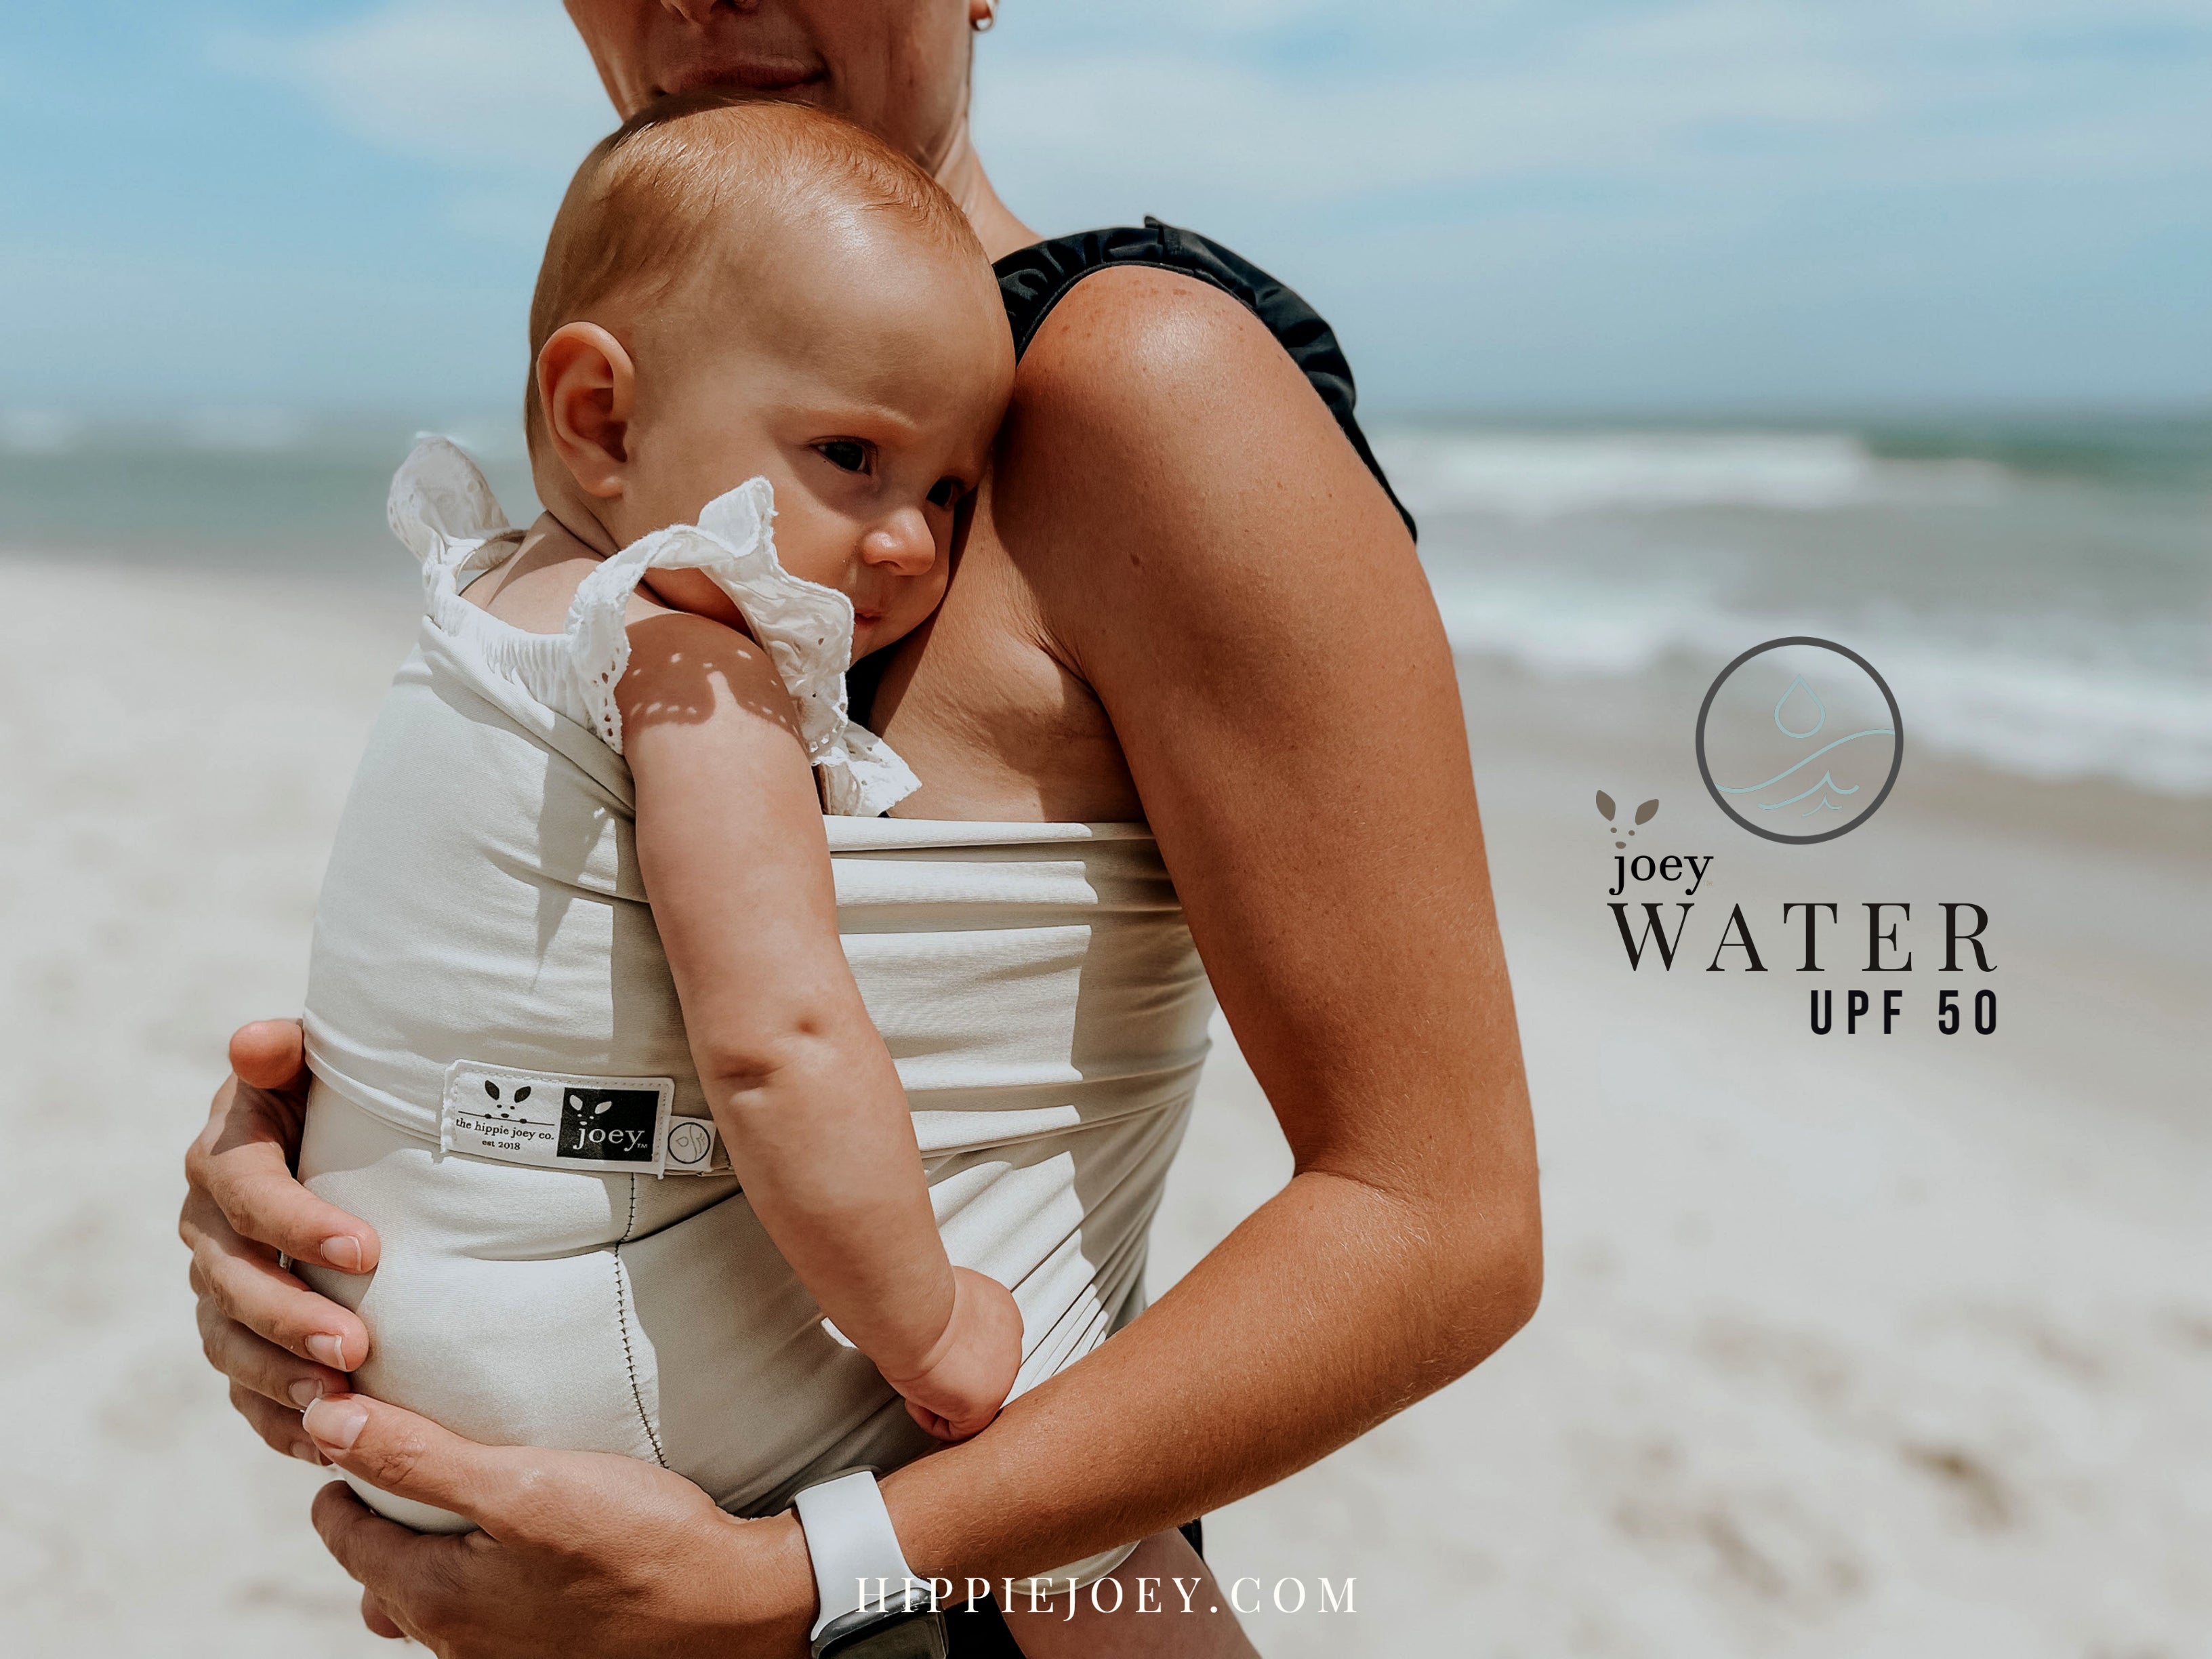 Joey WATER- Waterproof Baby Carrier, Baby Sling, Baby Wrap for swim & splash. UPF 50 baby product.